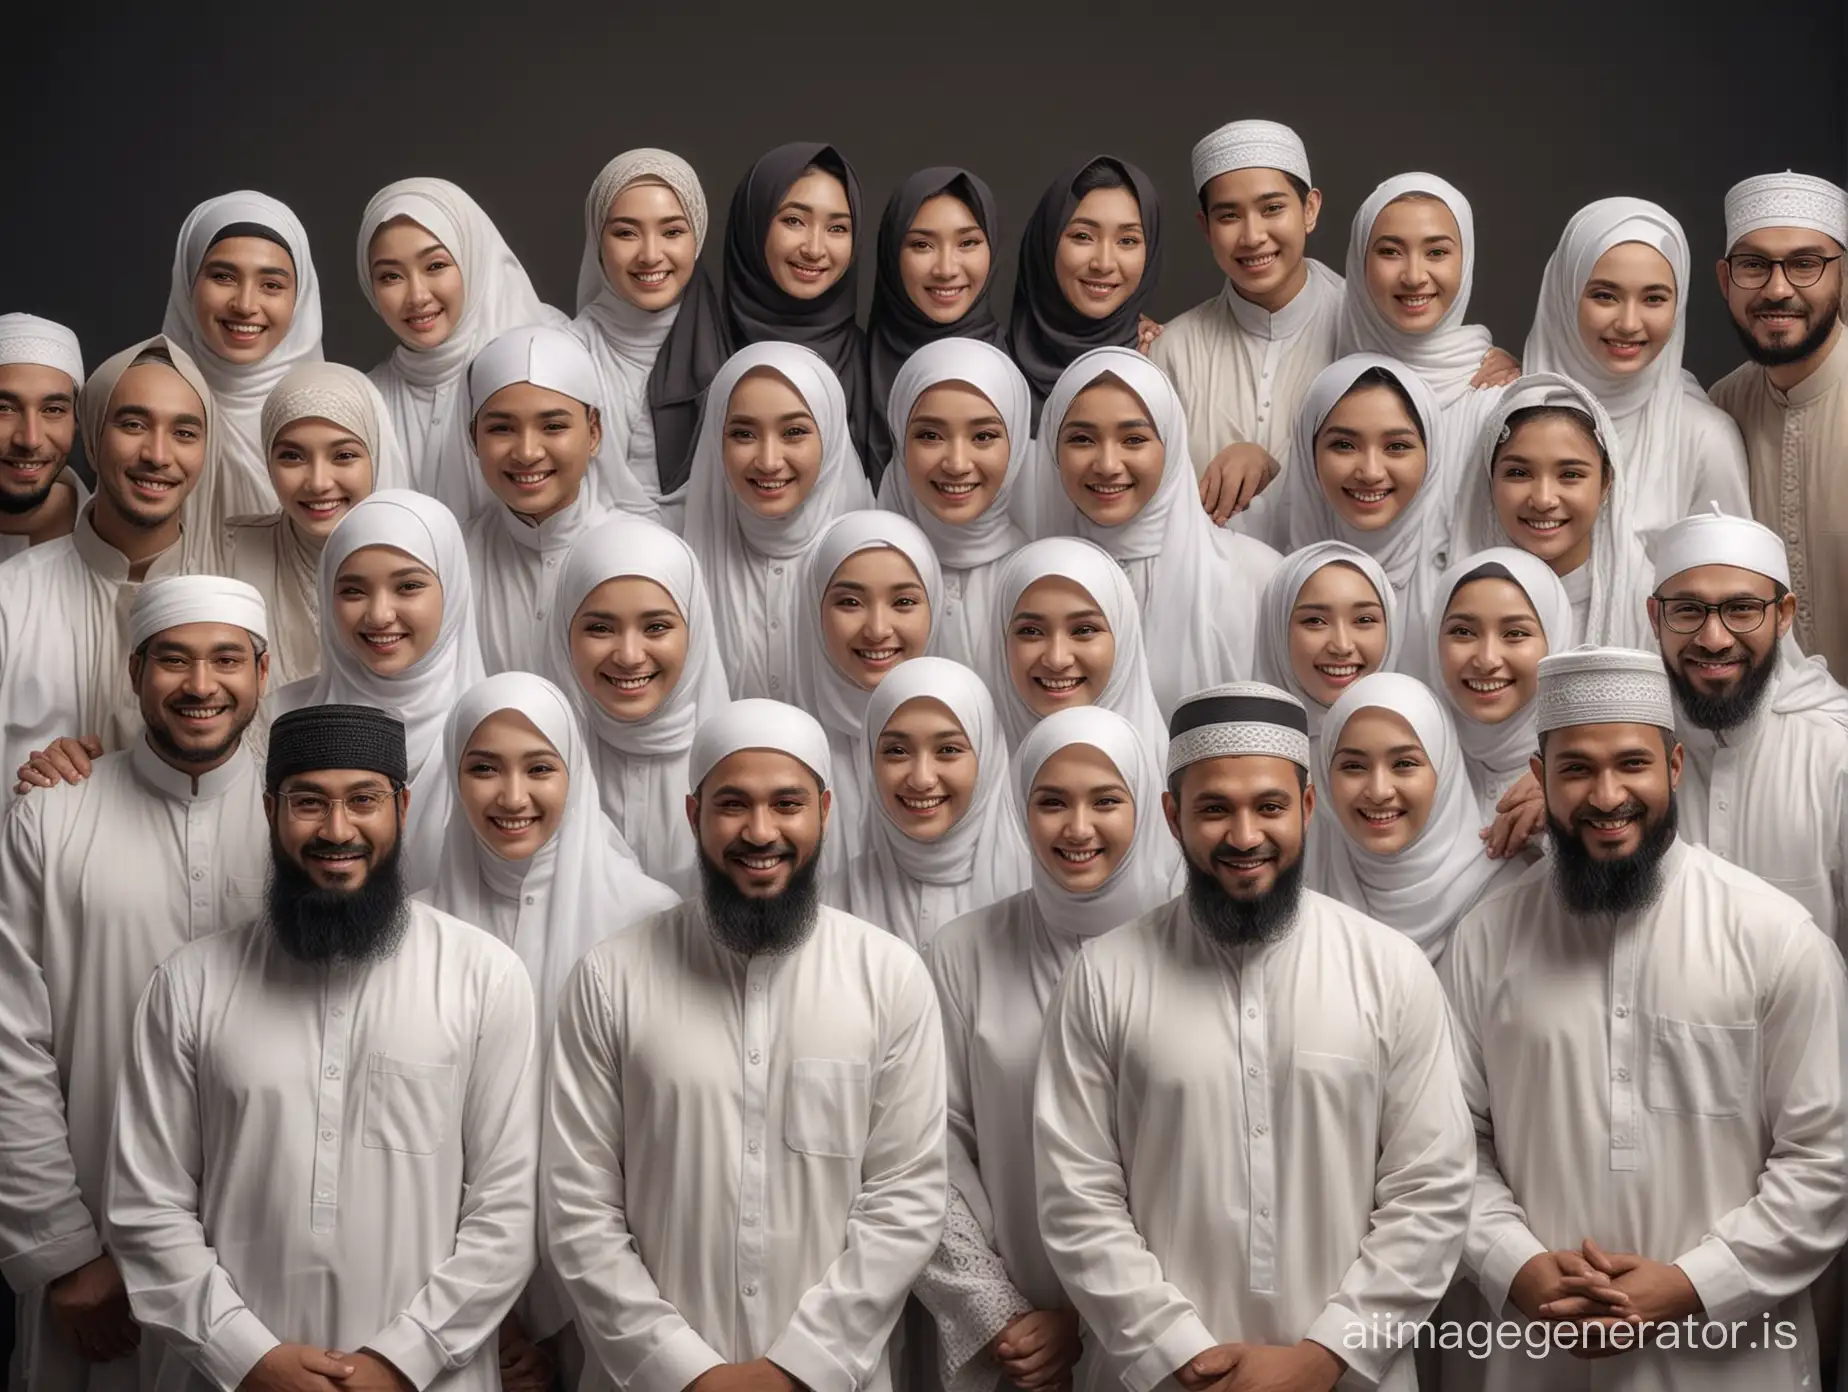 Diverse-Community-Celebration-Joyful-Gathering-of-Asian-Muslim-Adults-in-White-Attire